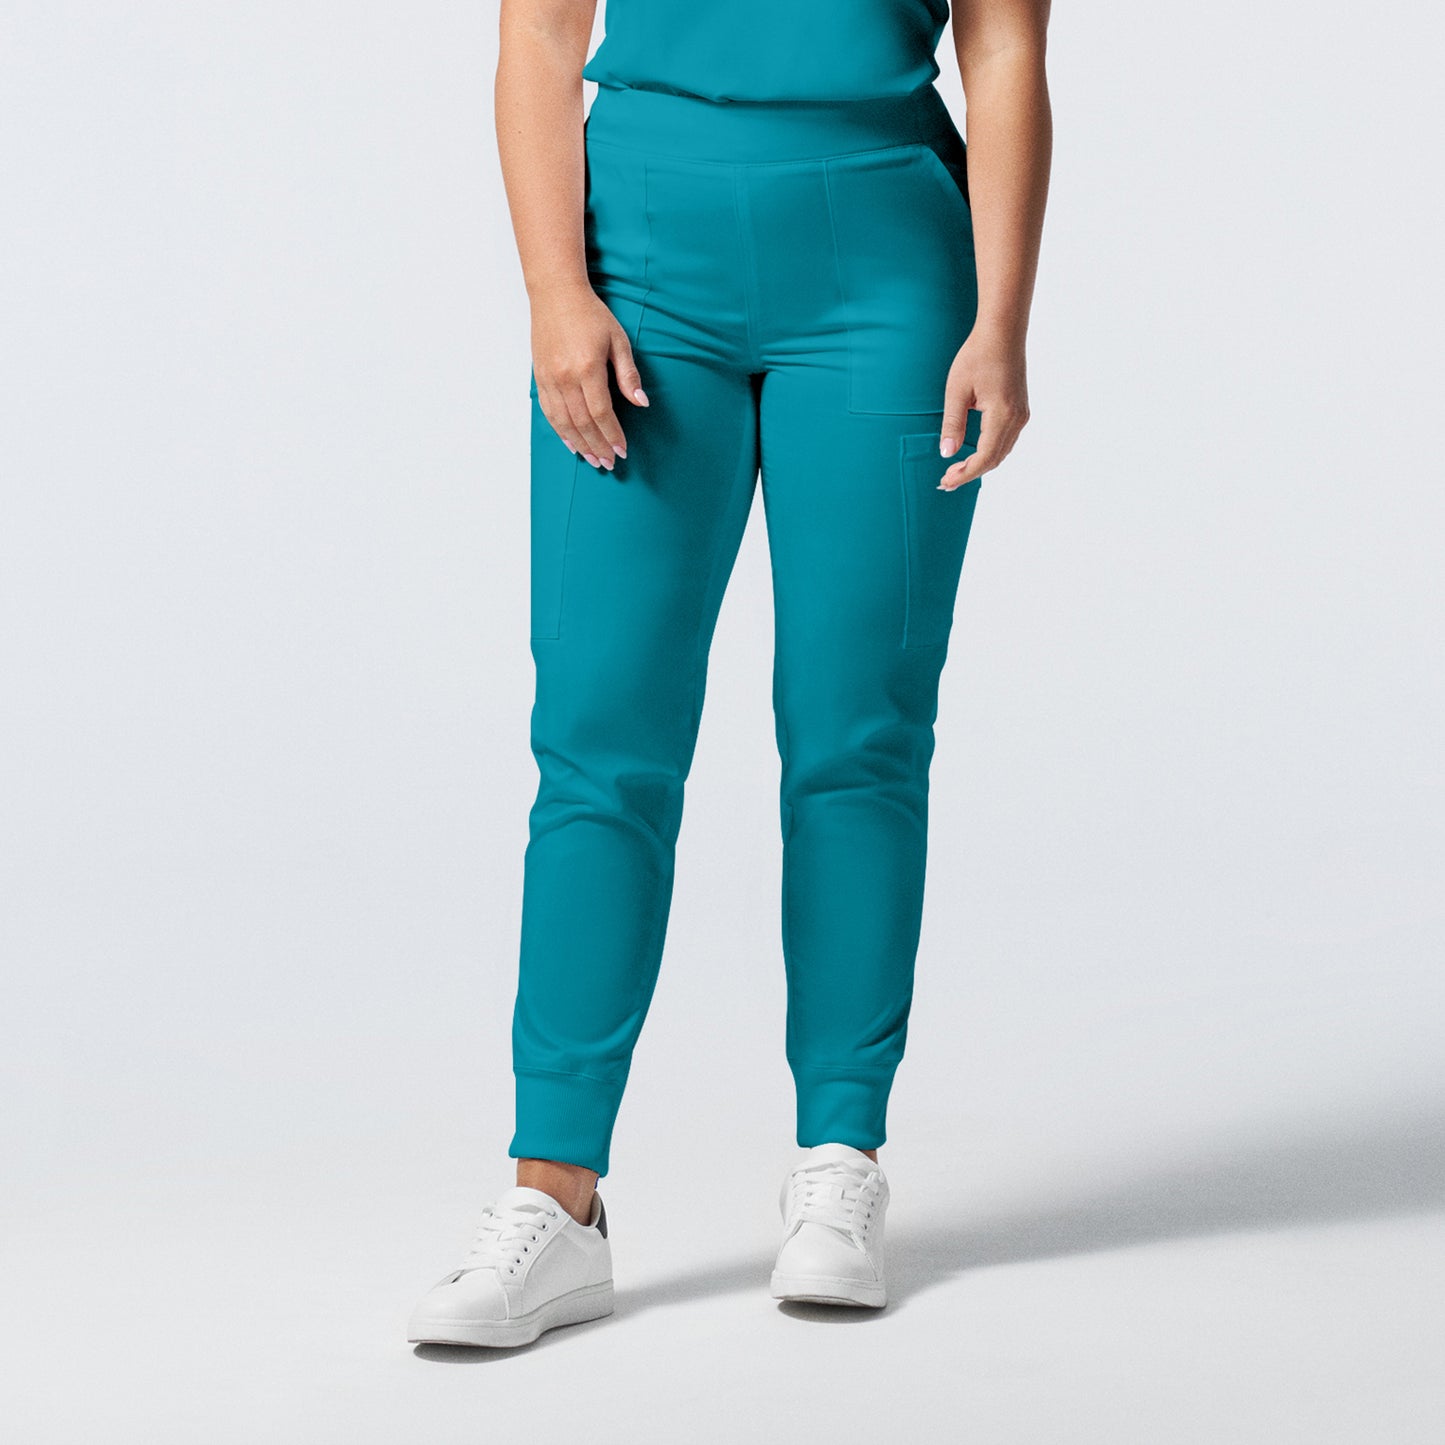 Pantalon femme jogger - PROFLEX - L406T long